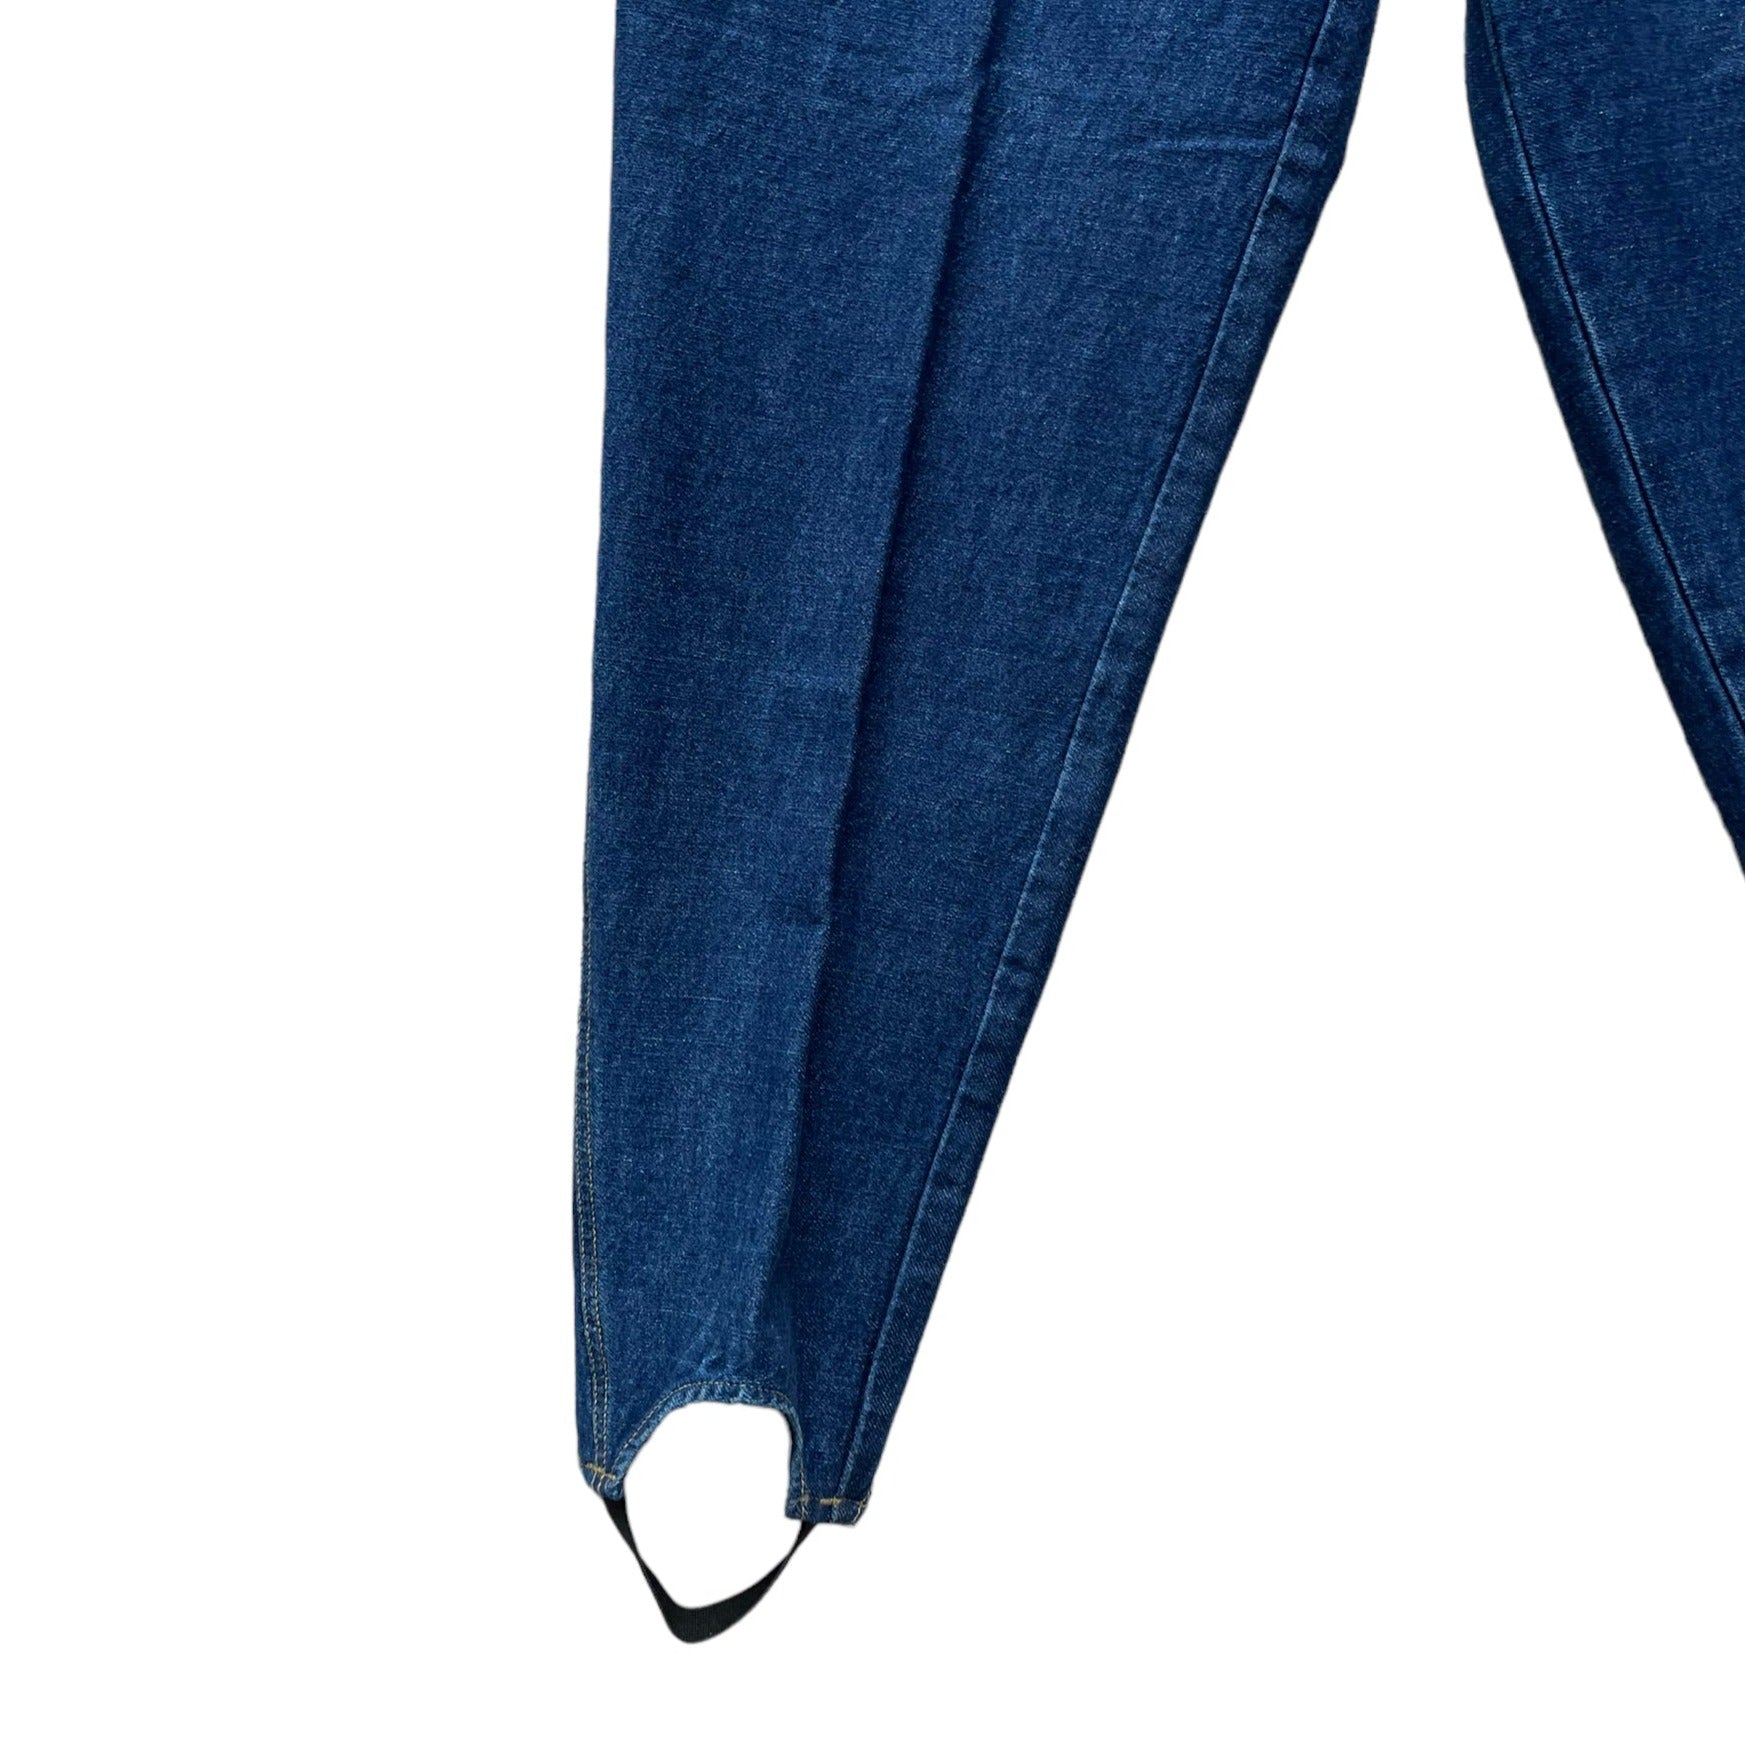 Right leg stir up view of Vintage Deadstock 80's Liz Claiborne Side Zip Stir Up Jeans